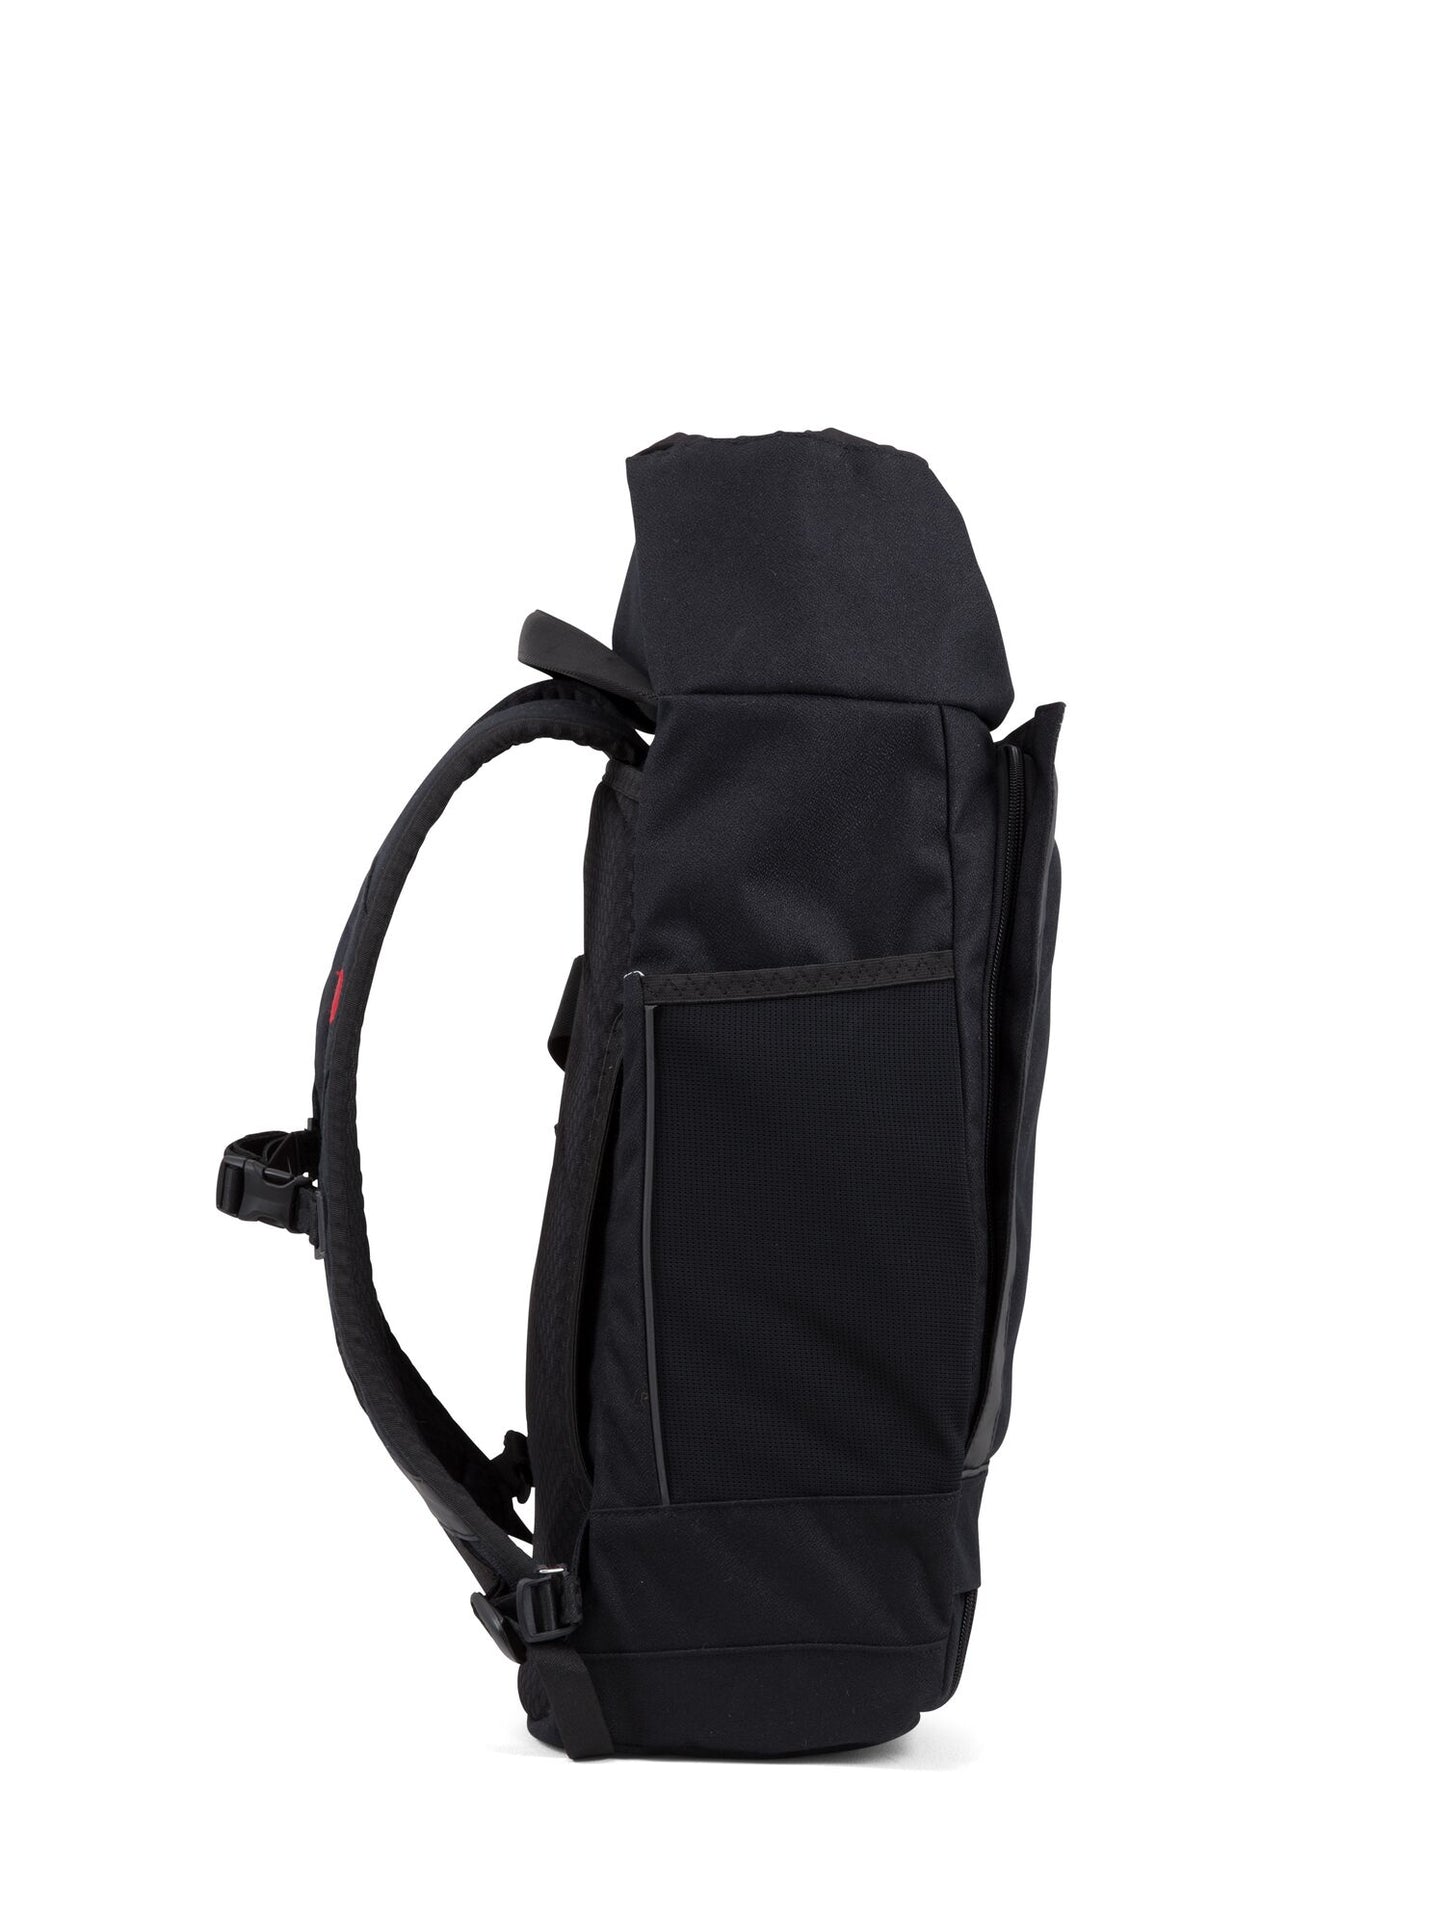 pinqponq-backpack-Blok-Medium-Licorice-Black-side